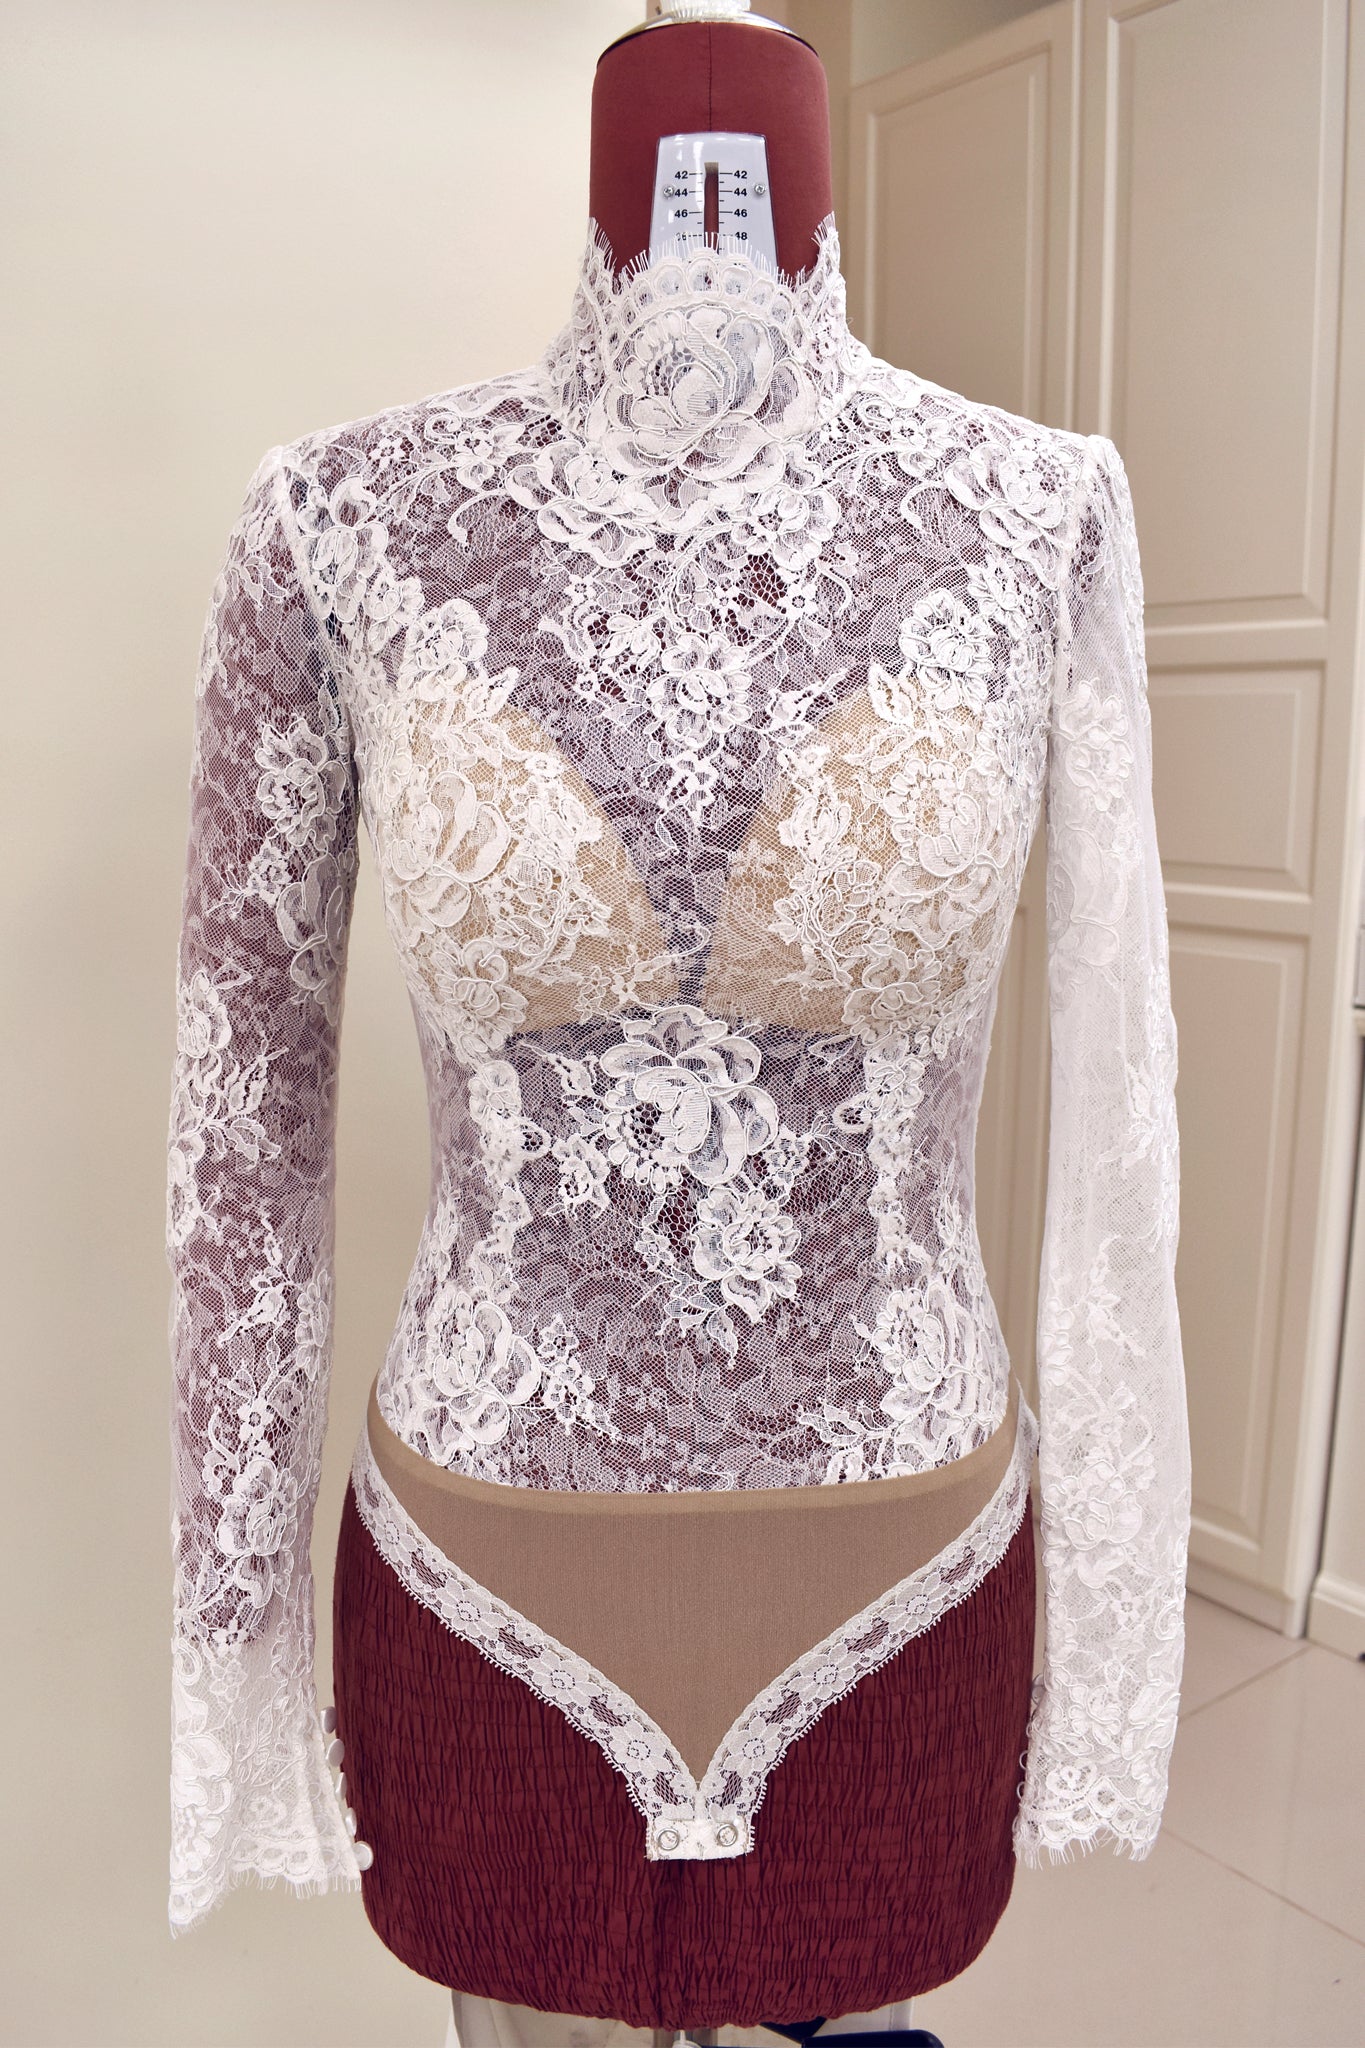 Lace Bridal Bodysuit, Long Sleeve Bridal Bodysuit, Wedding